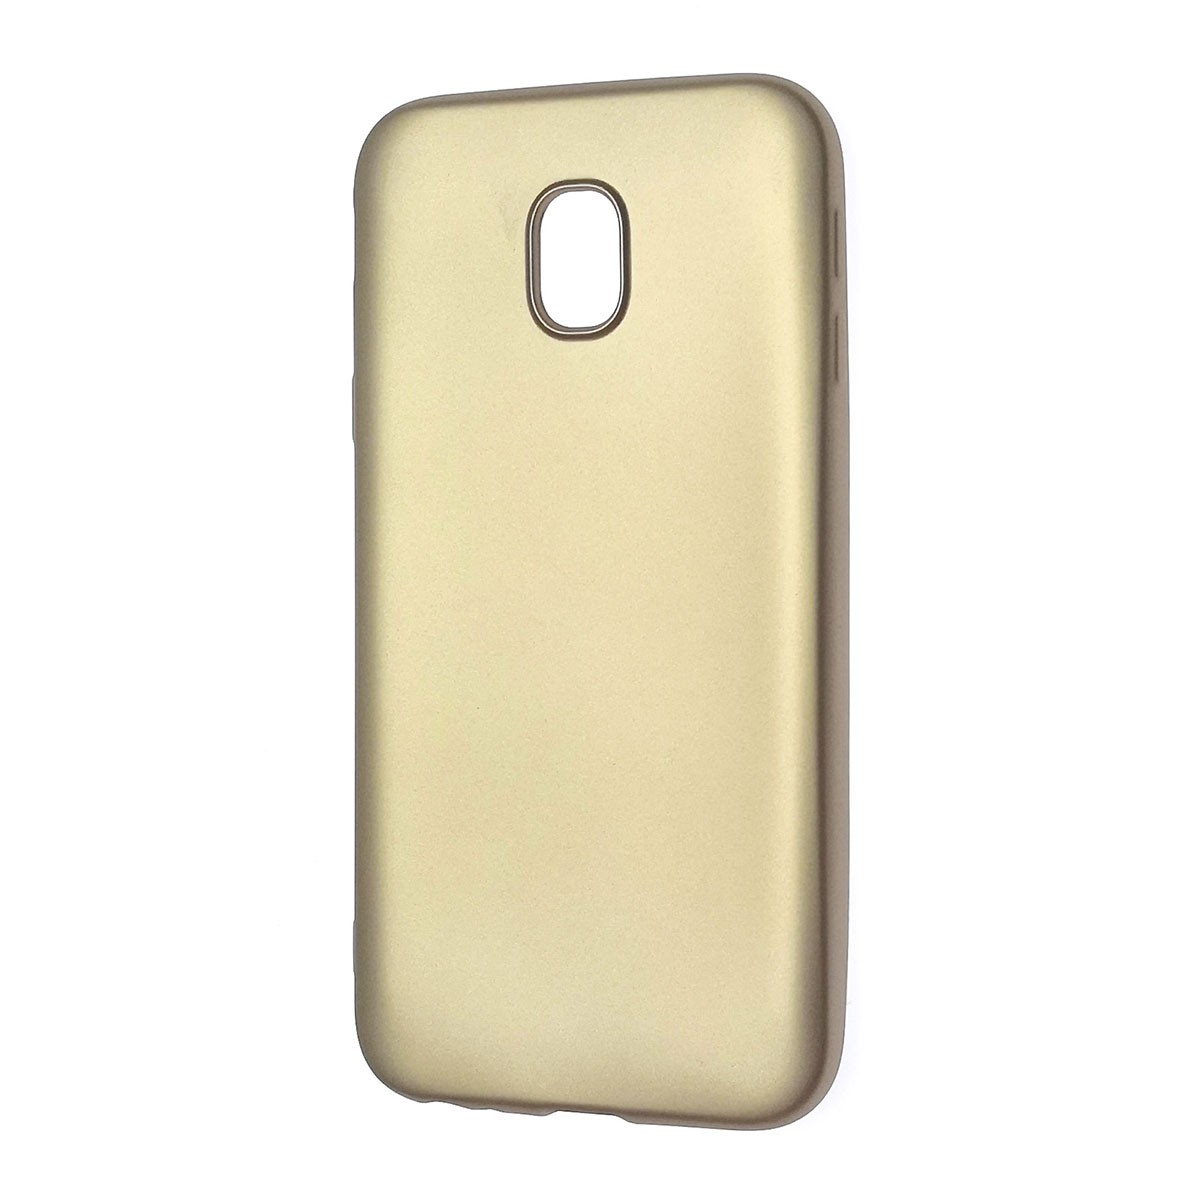 Чехол накладка J-Case THIN для SAMSUNG Galaxy J3 2017 (SM-J330), силикон, цвет золотистый.